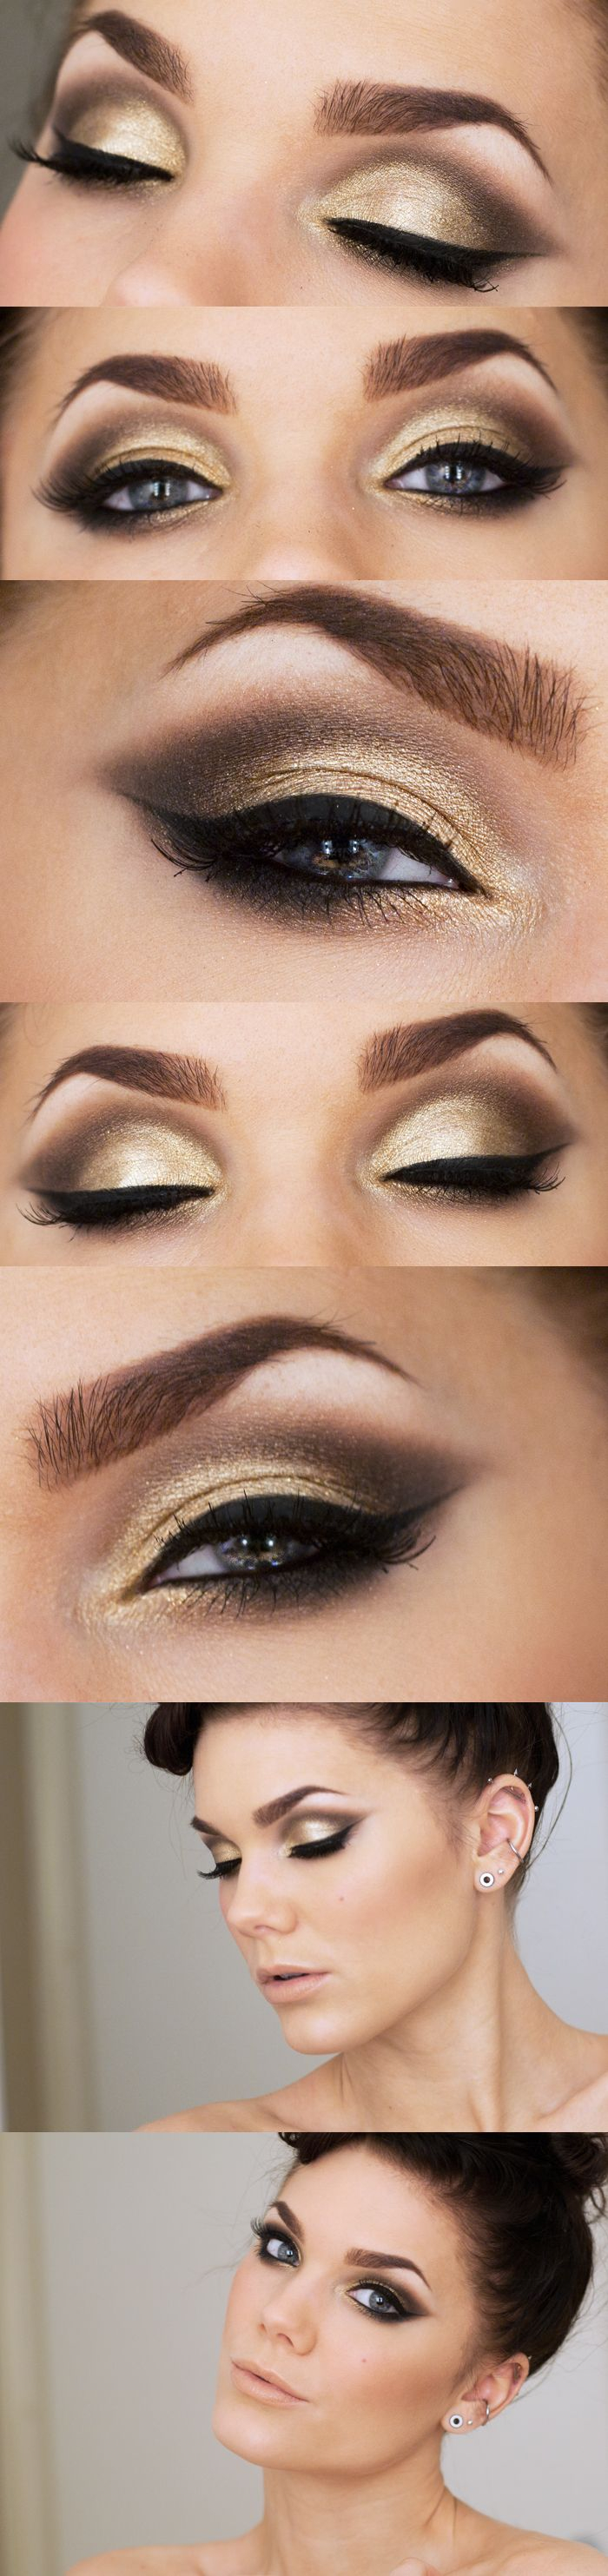 Dark Shadow Eye Makeup Gold And Black Smokey Eye Tutorials Best Gold And Black Eye Shadow